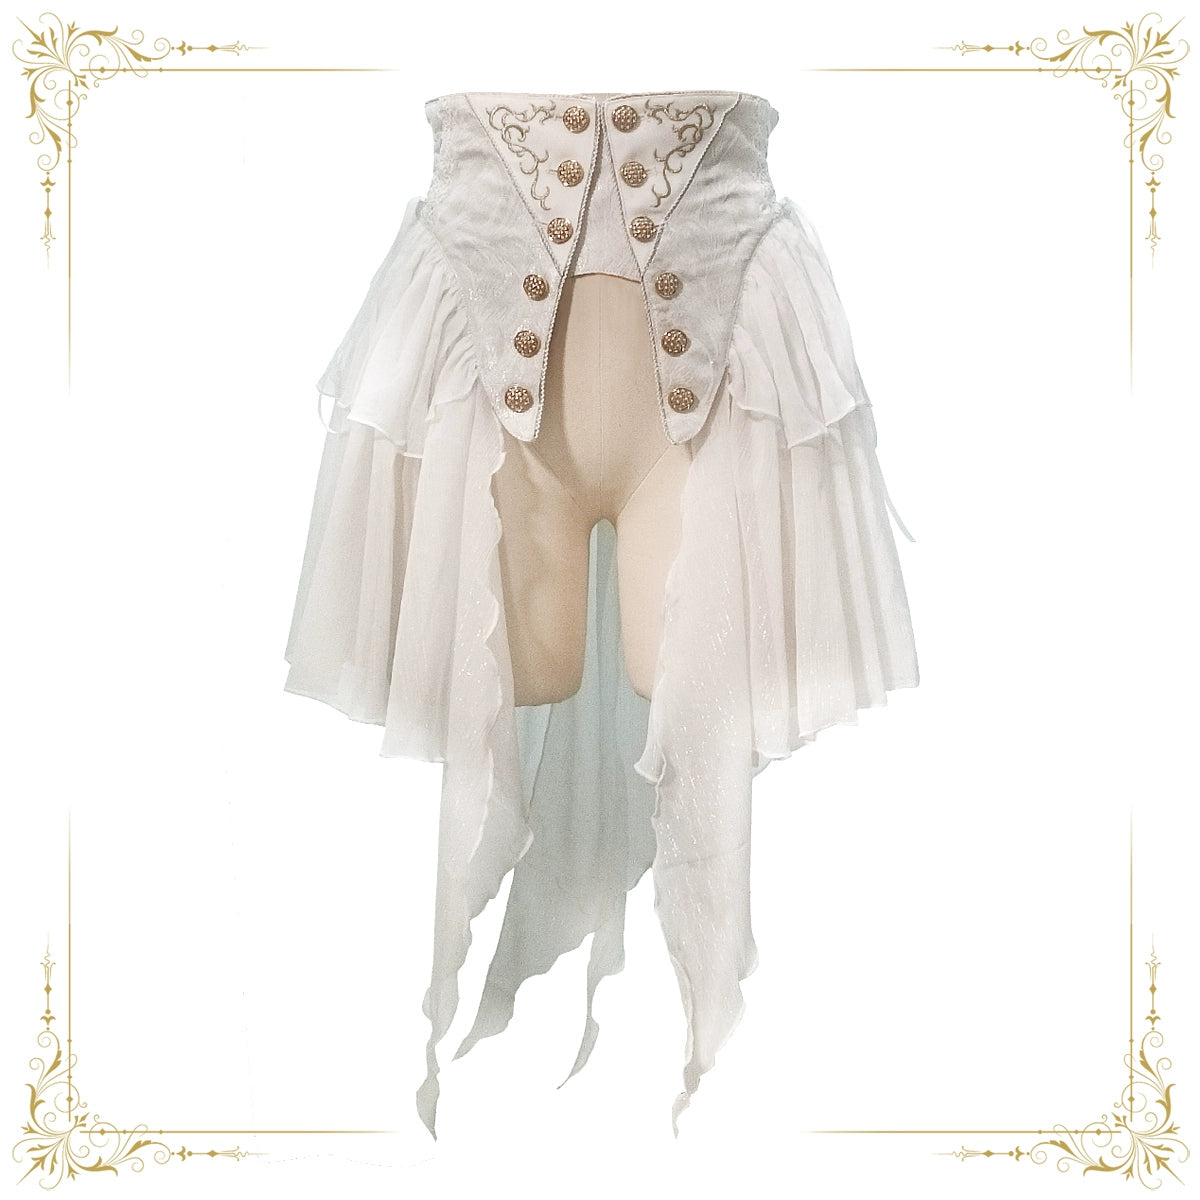 (BFM)Immortal Thorn~Immortal Glass Castle~Ouji Lolita Girdle Prince Style Long Sheer White Corset S white girdle 